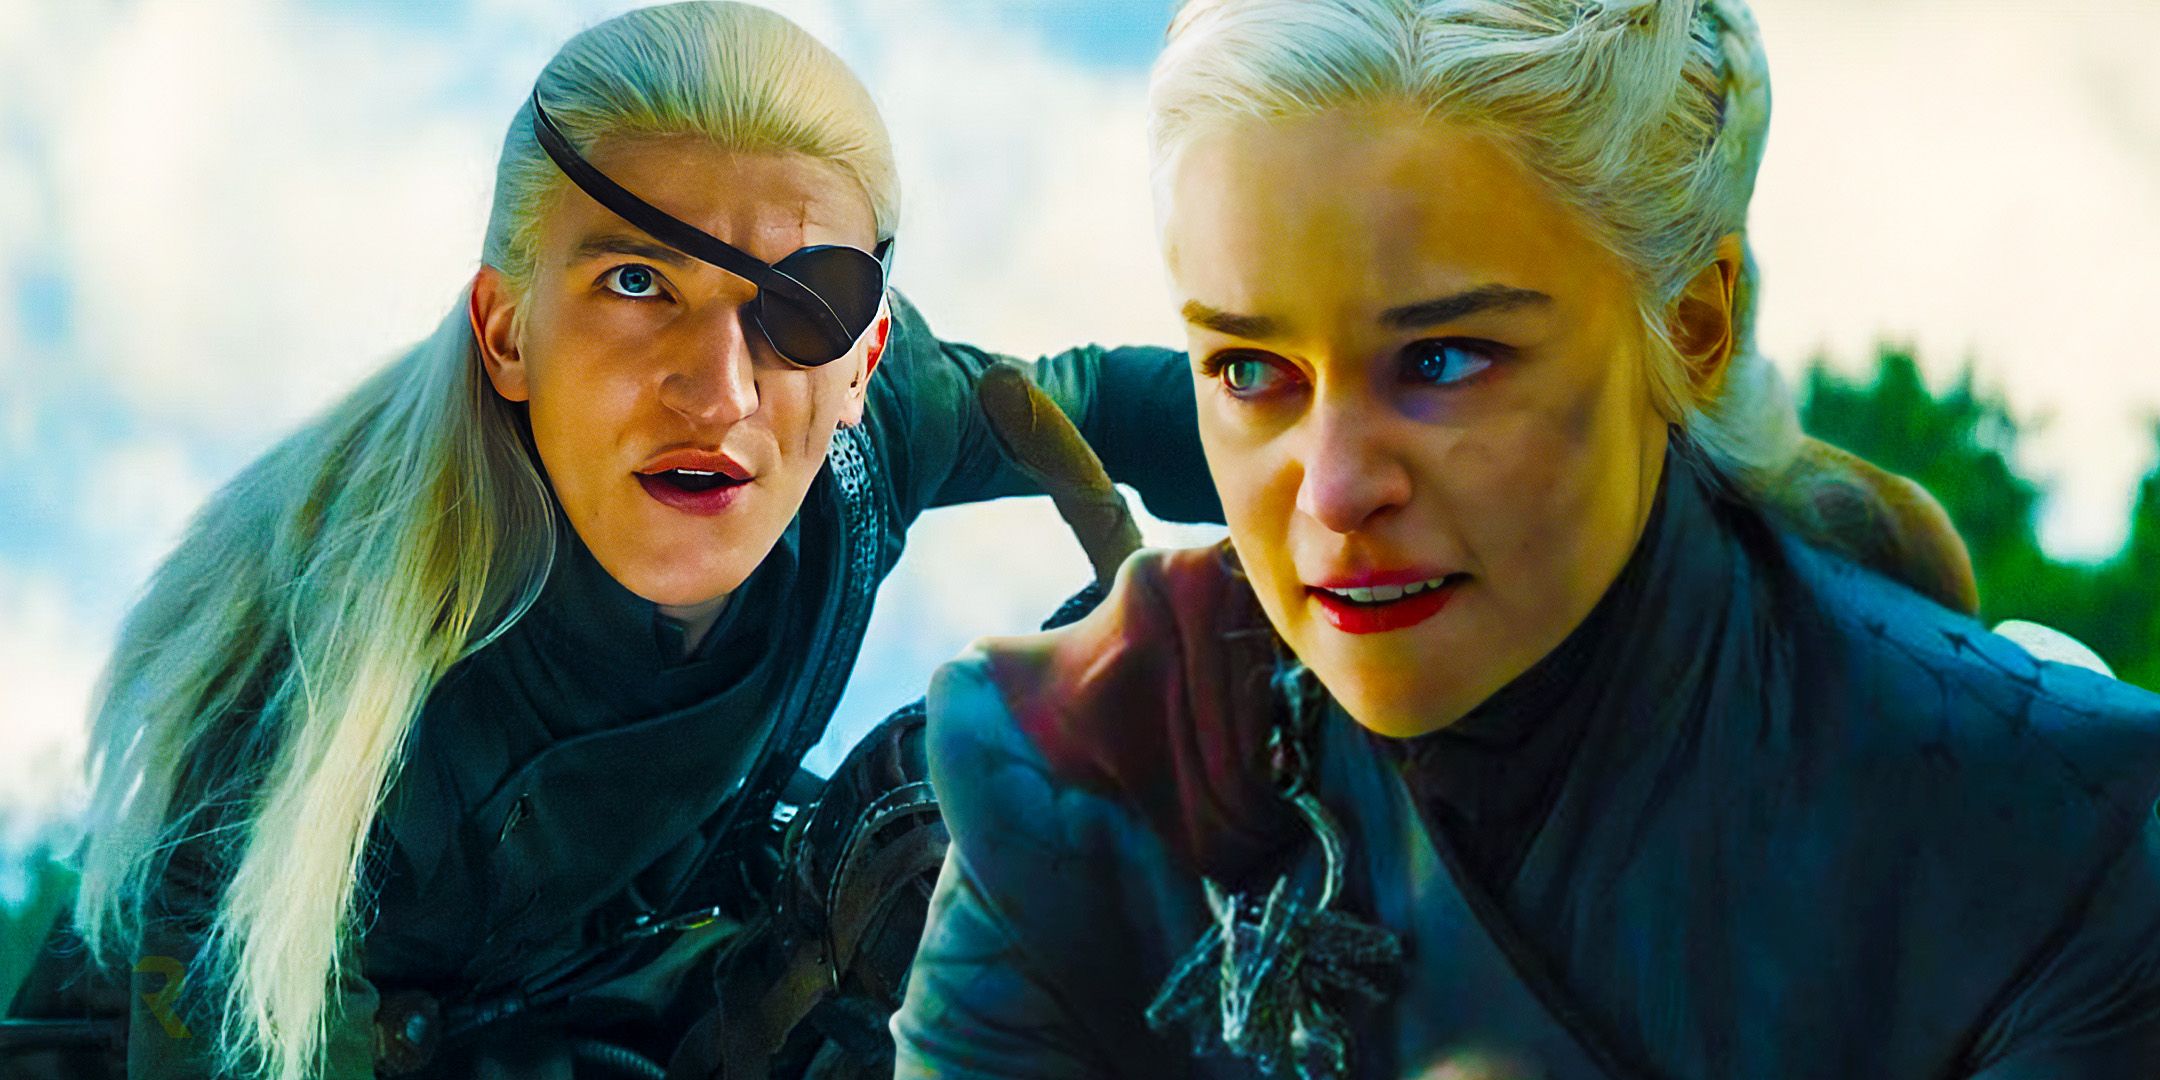 Aemond Targaryen riding Vhagar in House of the Dragon season 2 with Daenerys Targaryen riding Drogon in Game of Thrones season 8